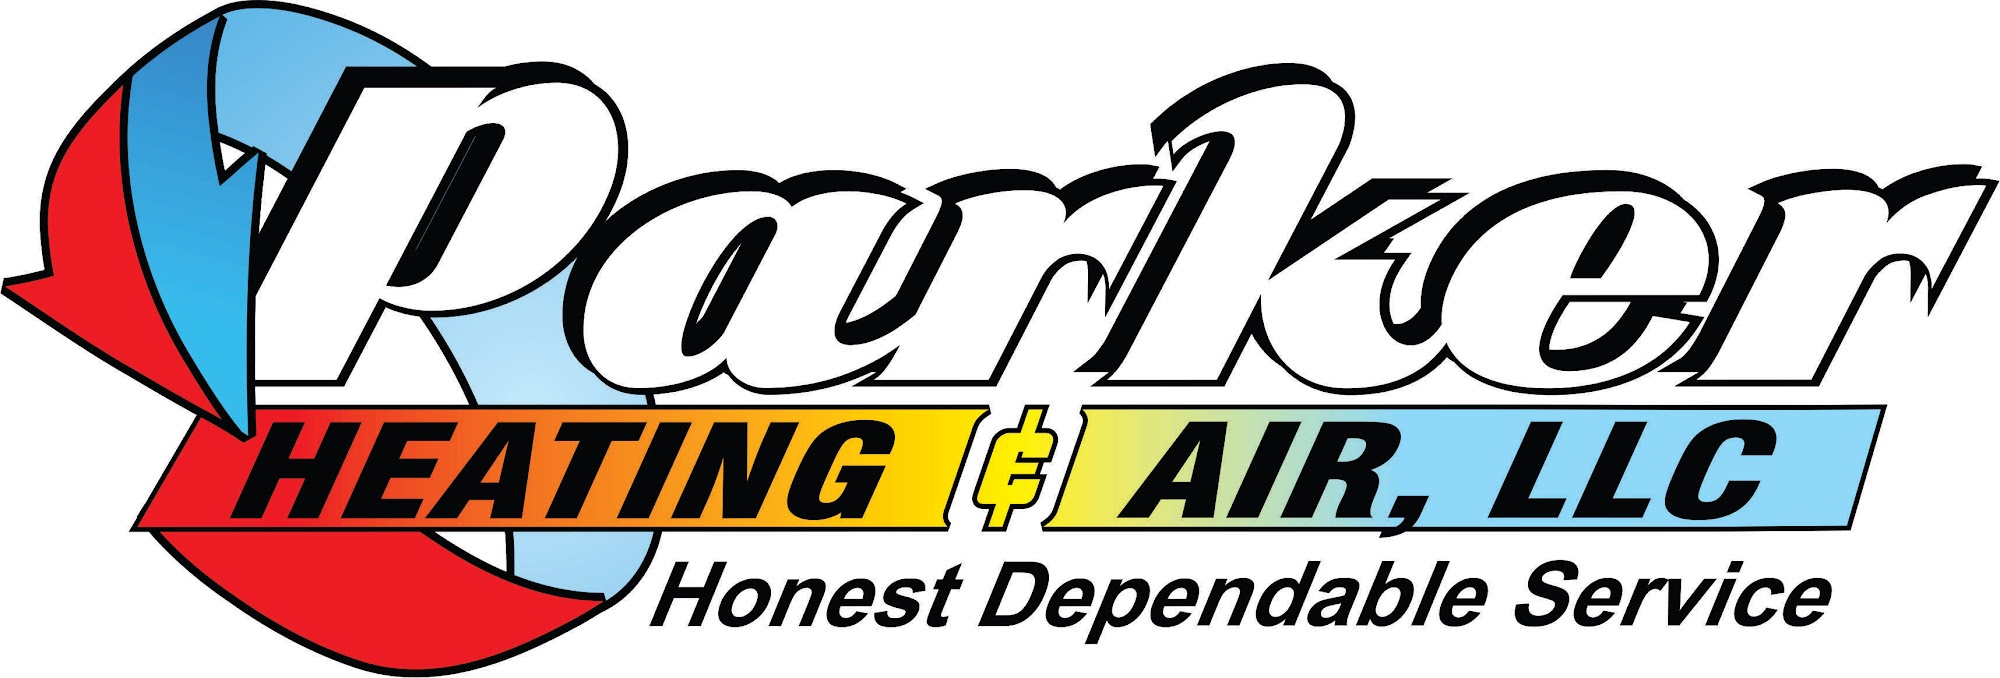 Parker Heating & Air LLC 429 N Main St, Dobson North Carolina 27017